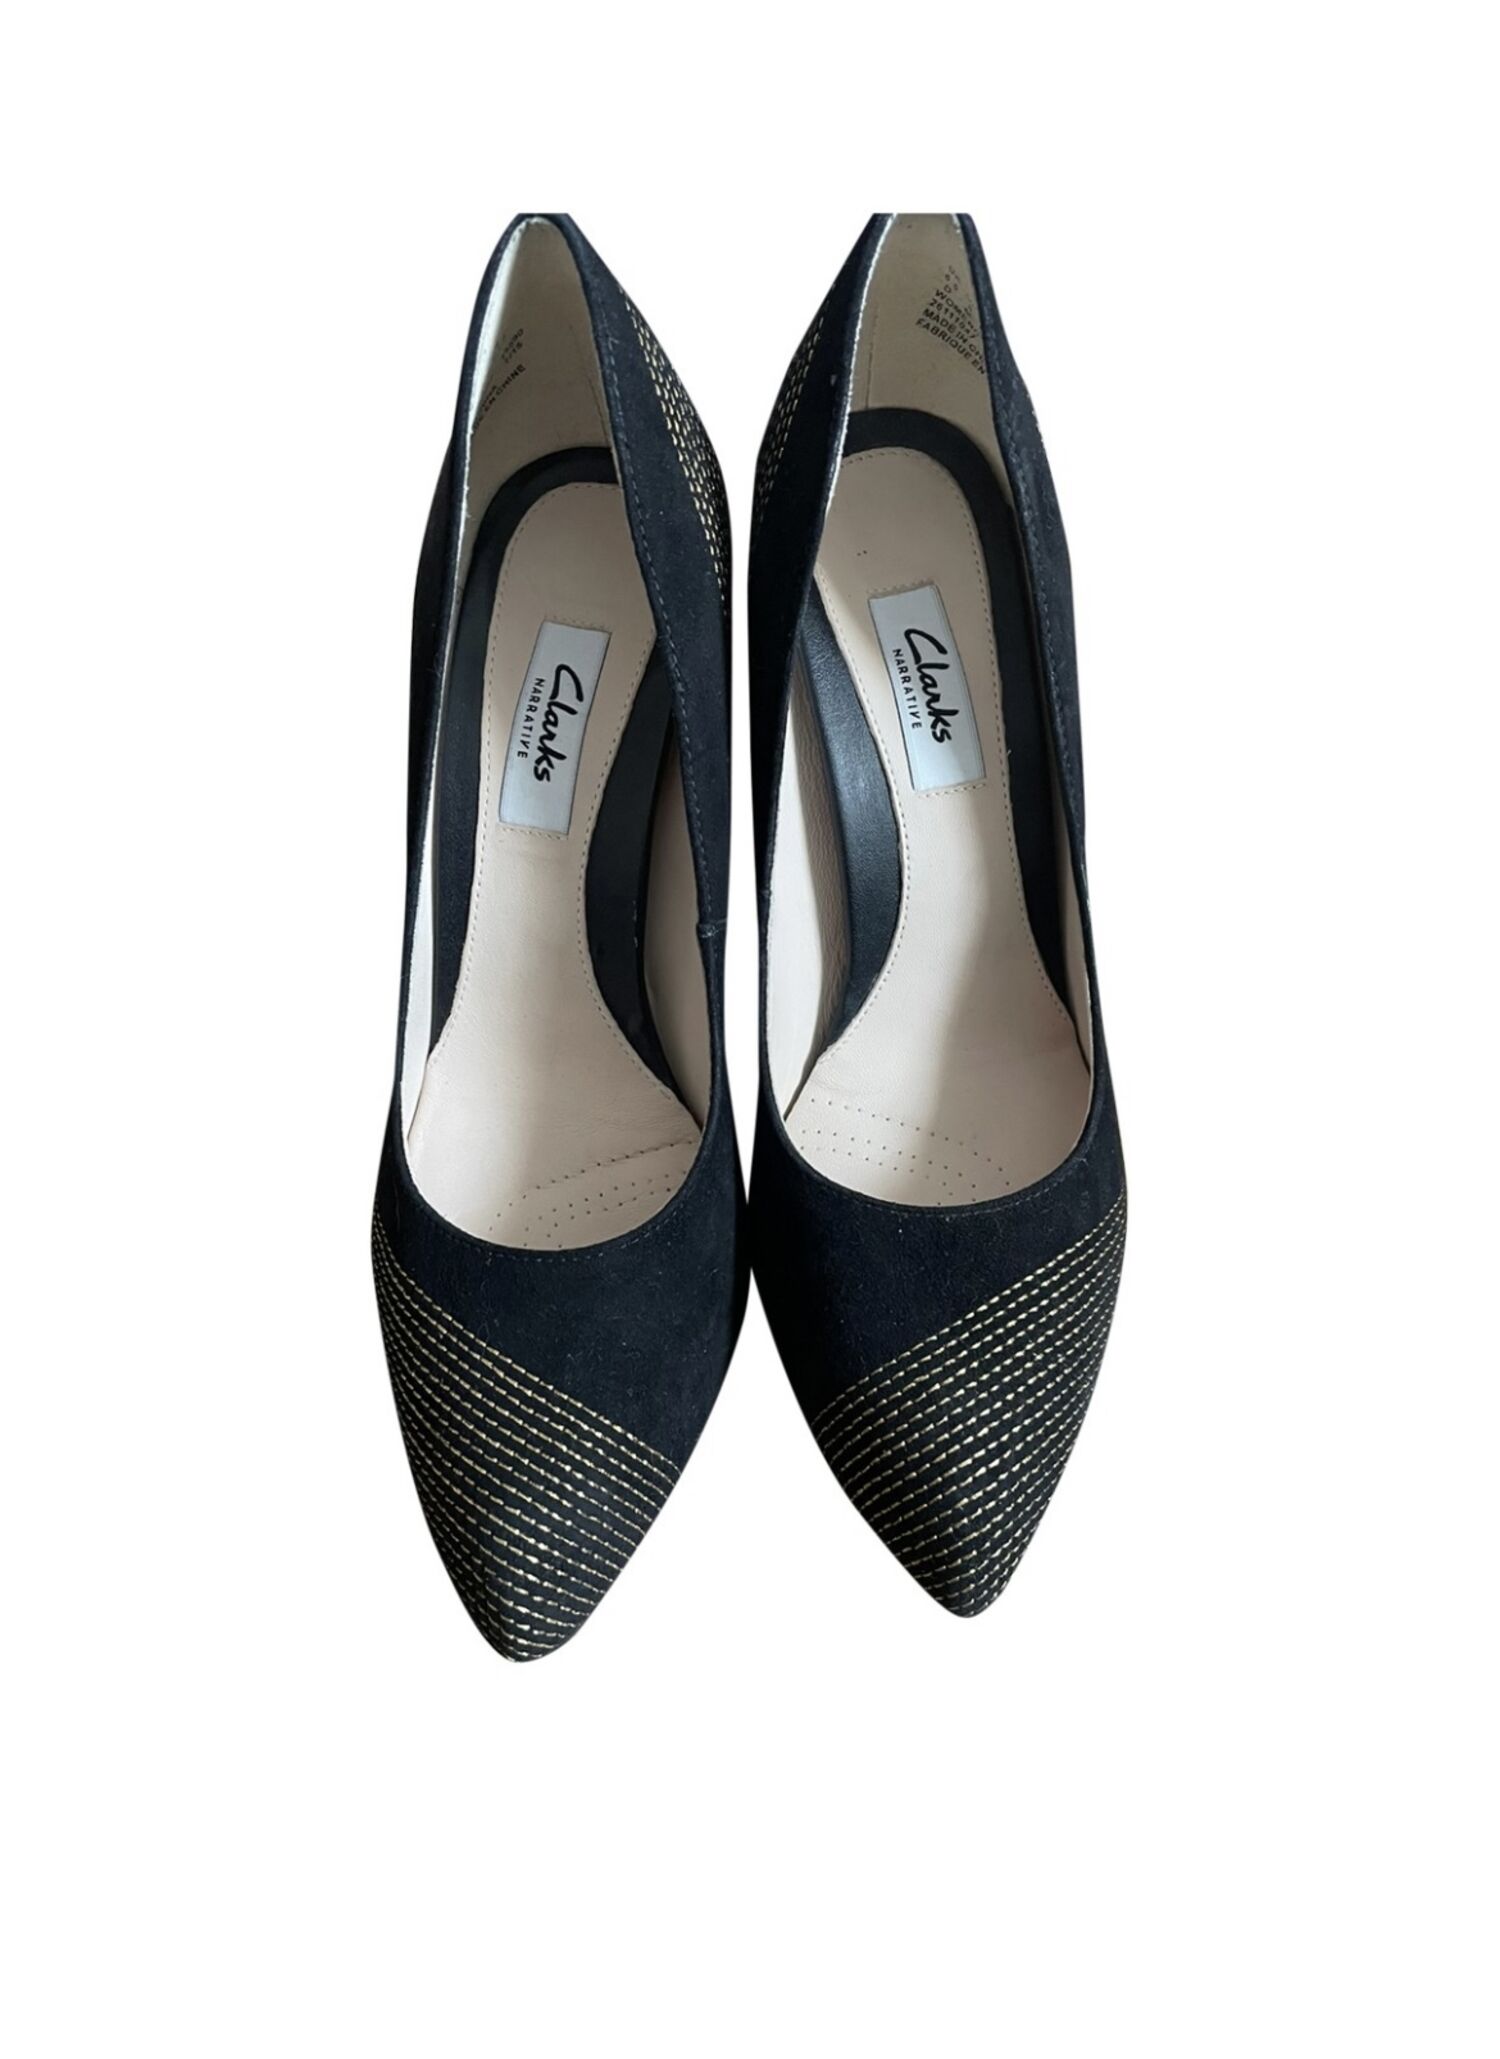 Flecha Instalaciones Oceano Velvet High-heels Shoes Clarks - 39, buy pre-owned at 36 EUR